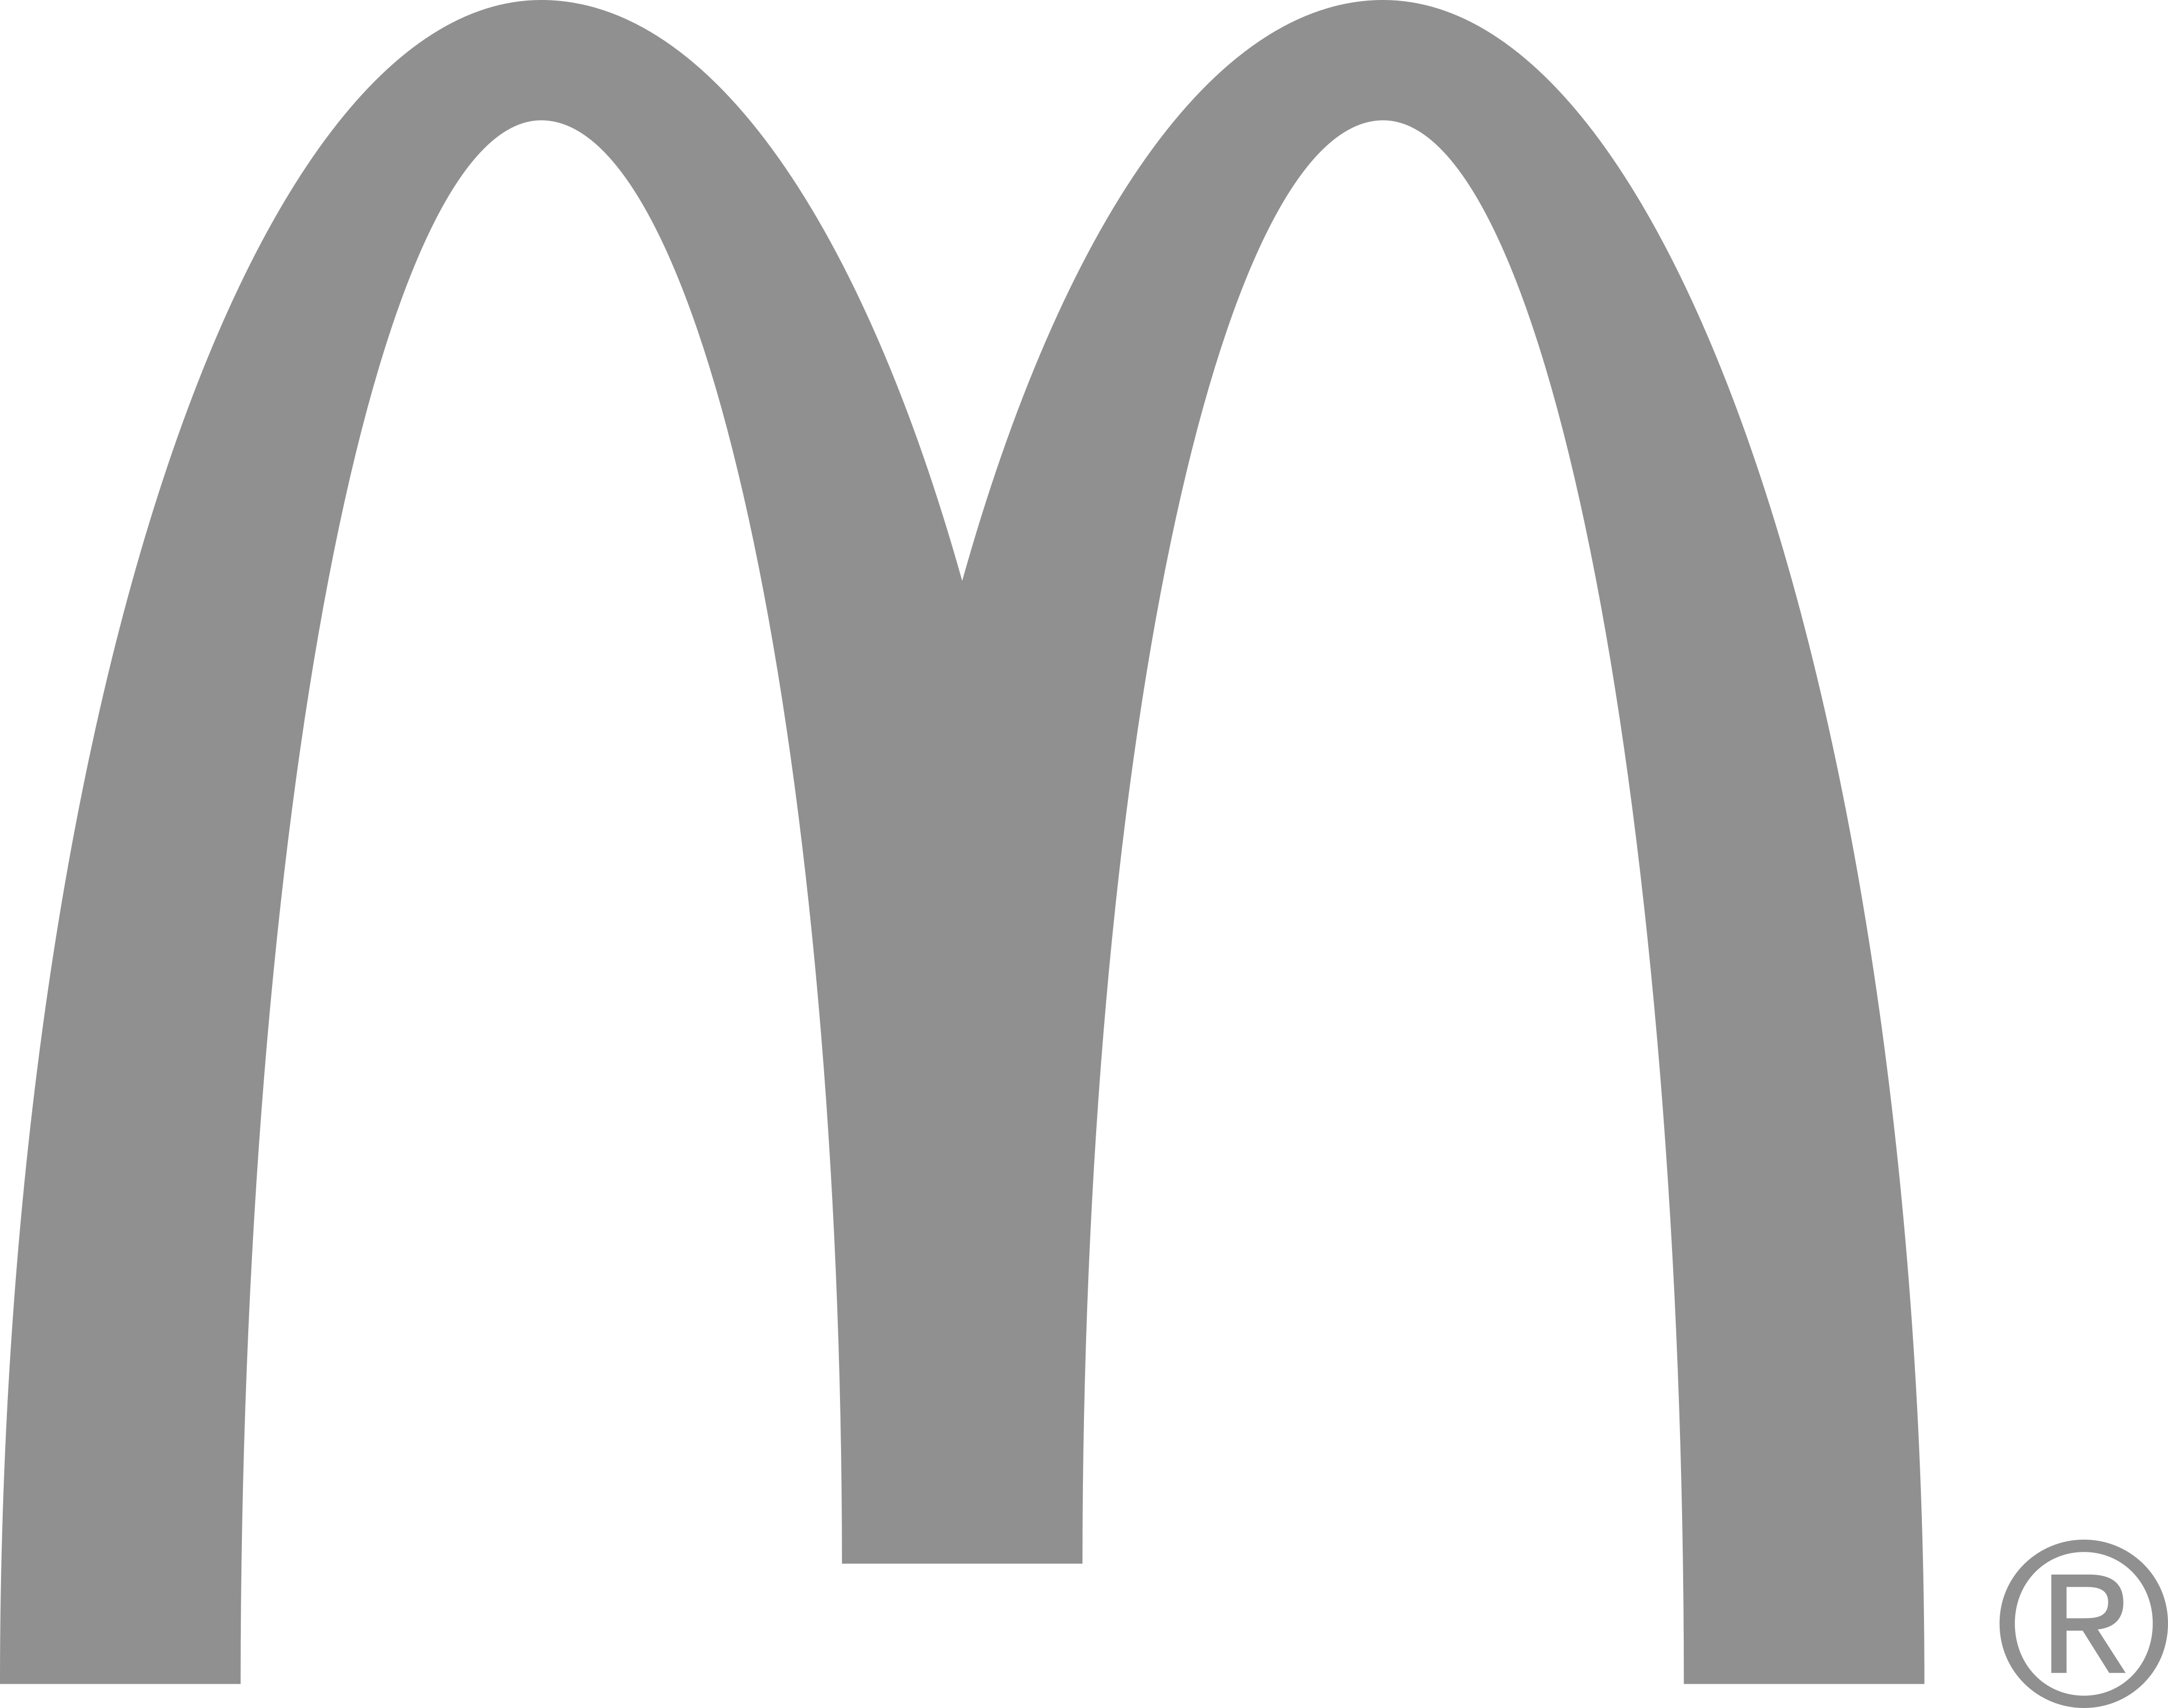 mcdonalds logo 1 1